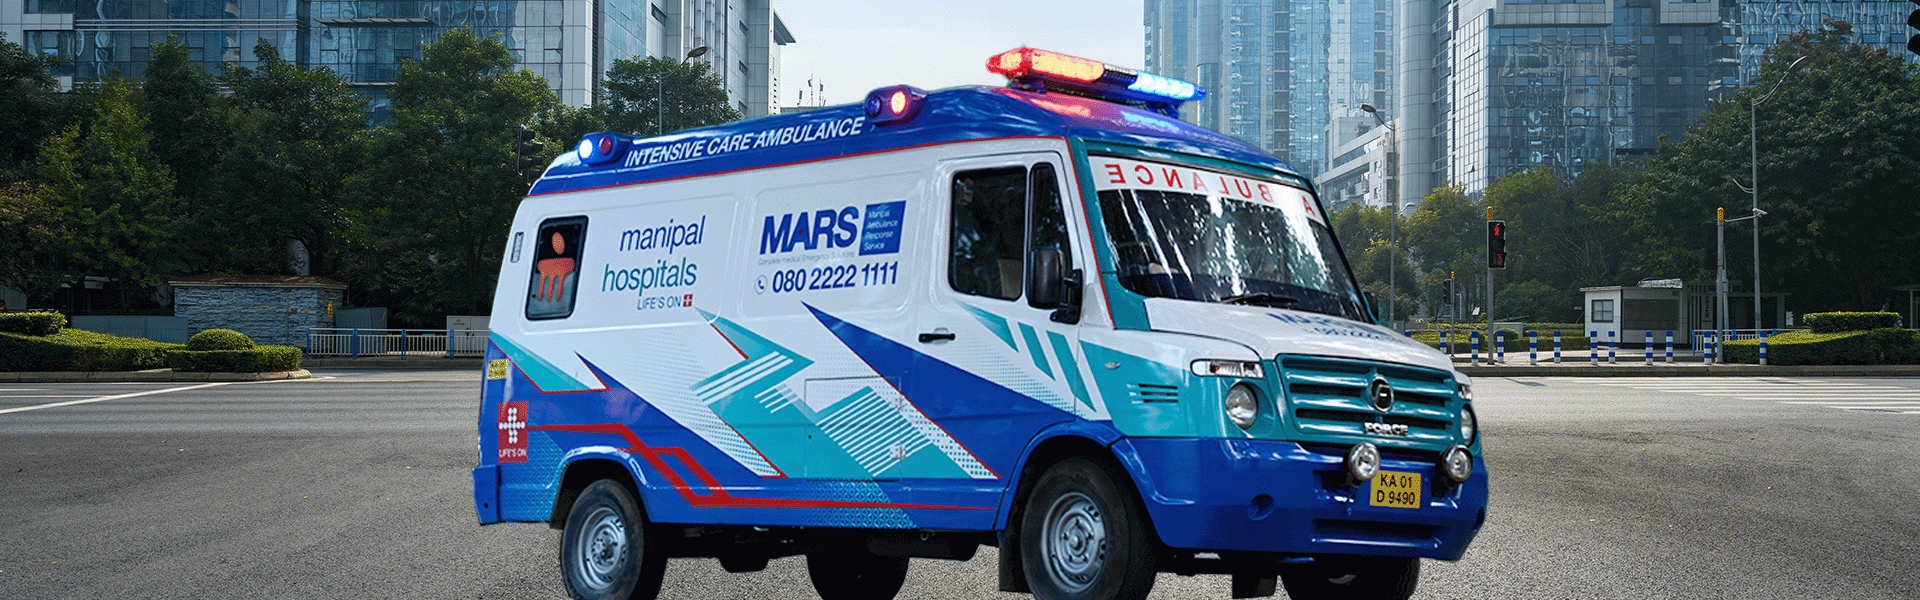 Manipal Hospitals Ambulance Response Services